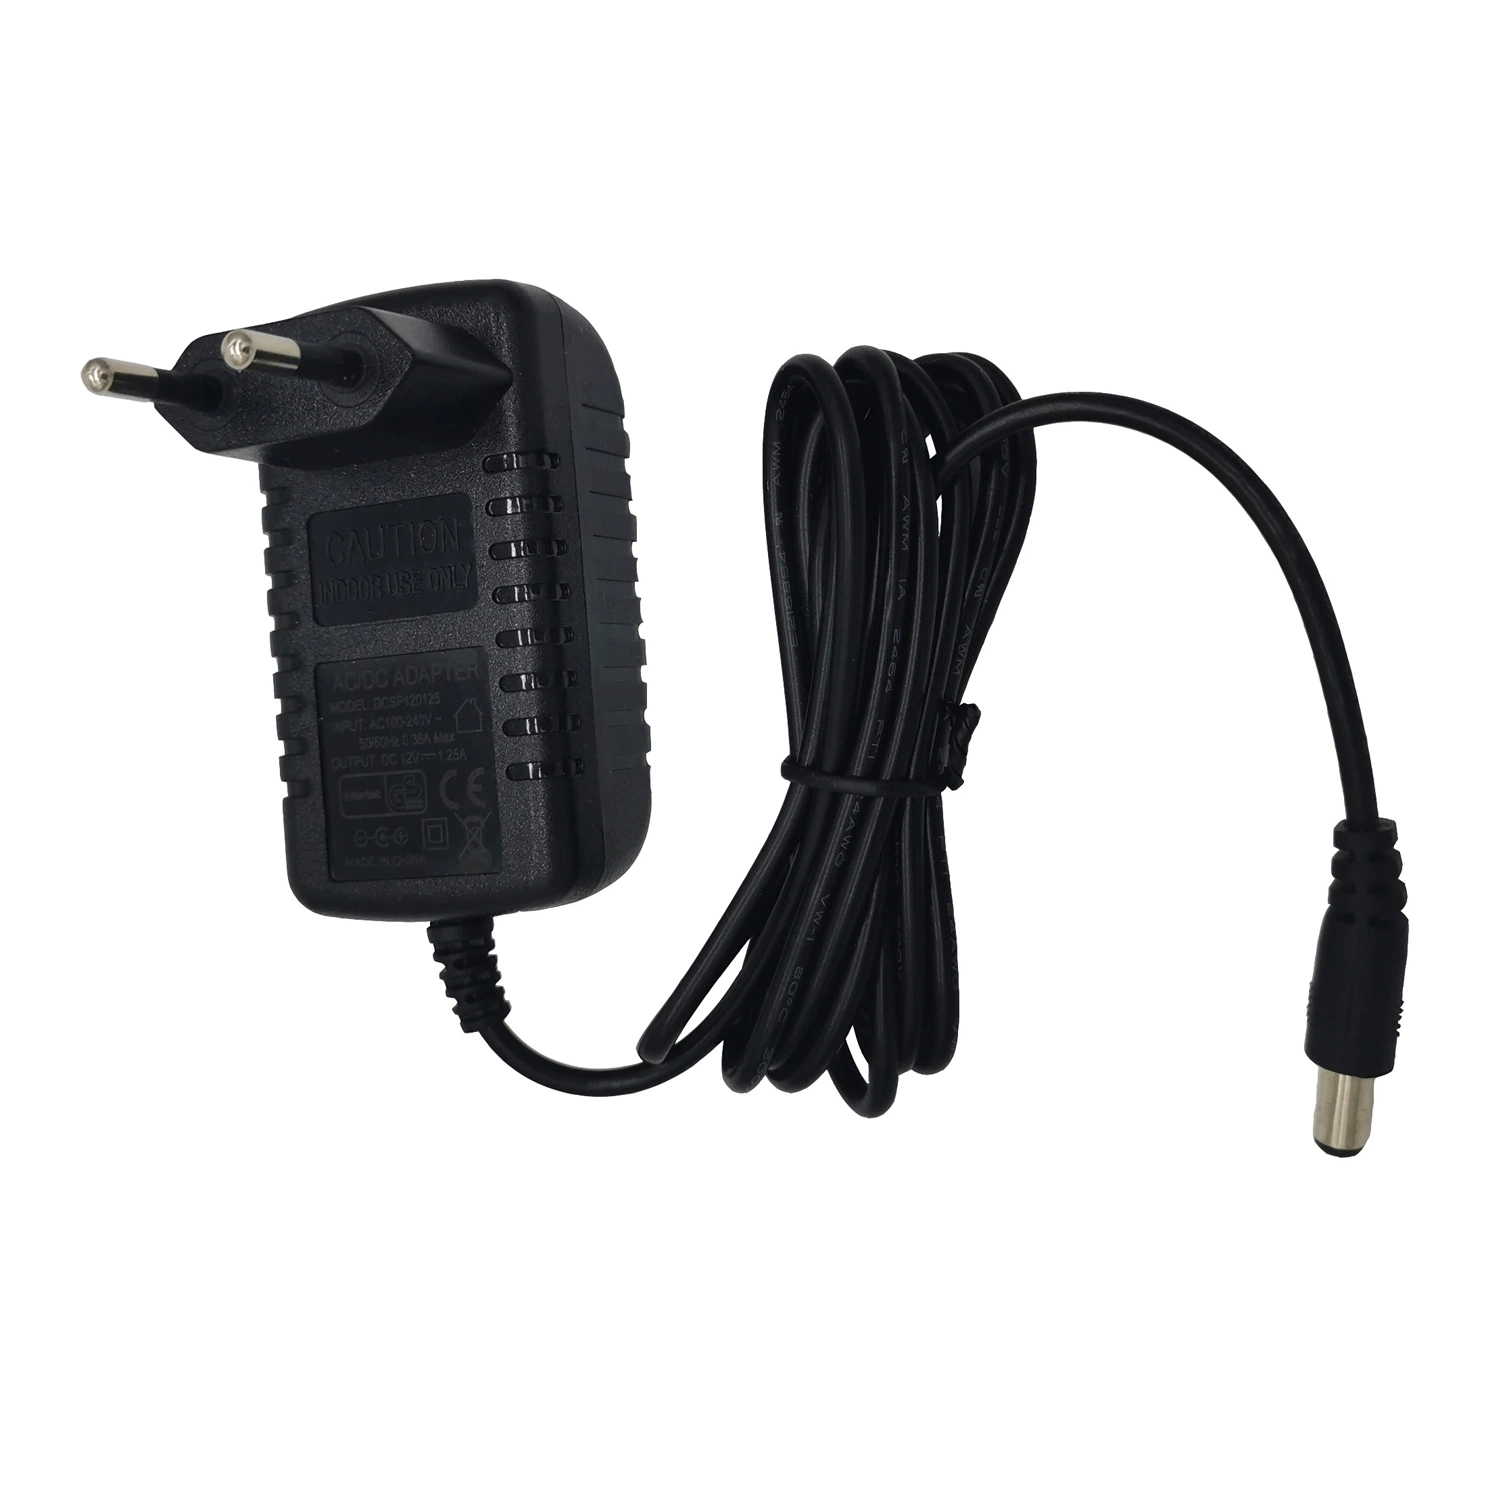 Us Plug 12V Universal Electronic AC adaptateur d'alimentation CC